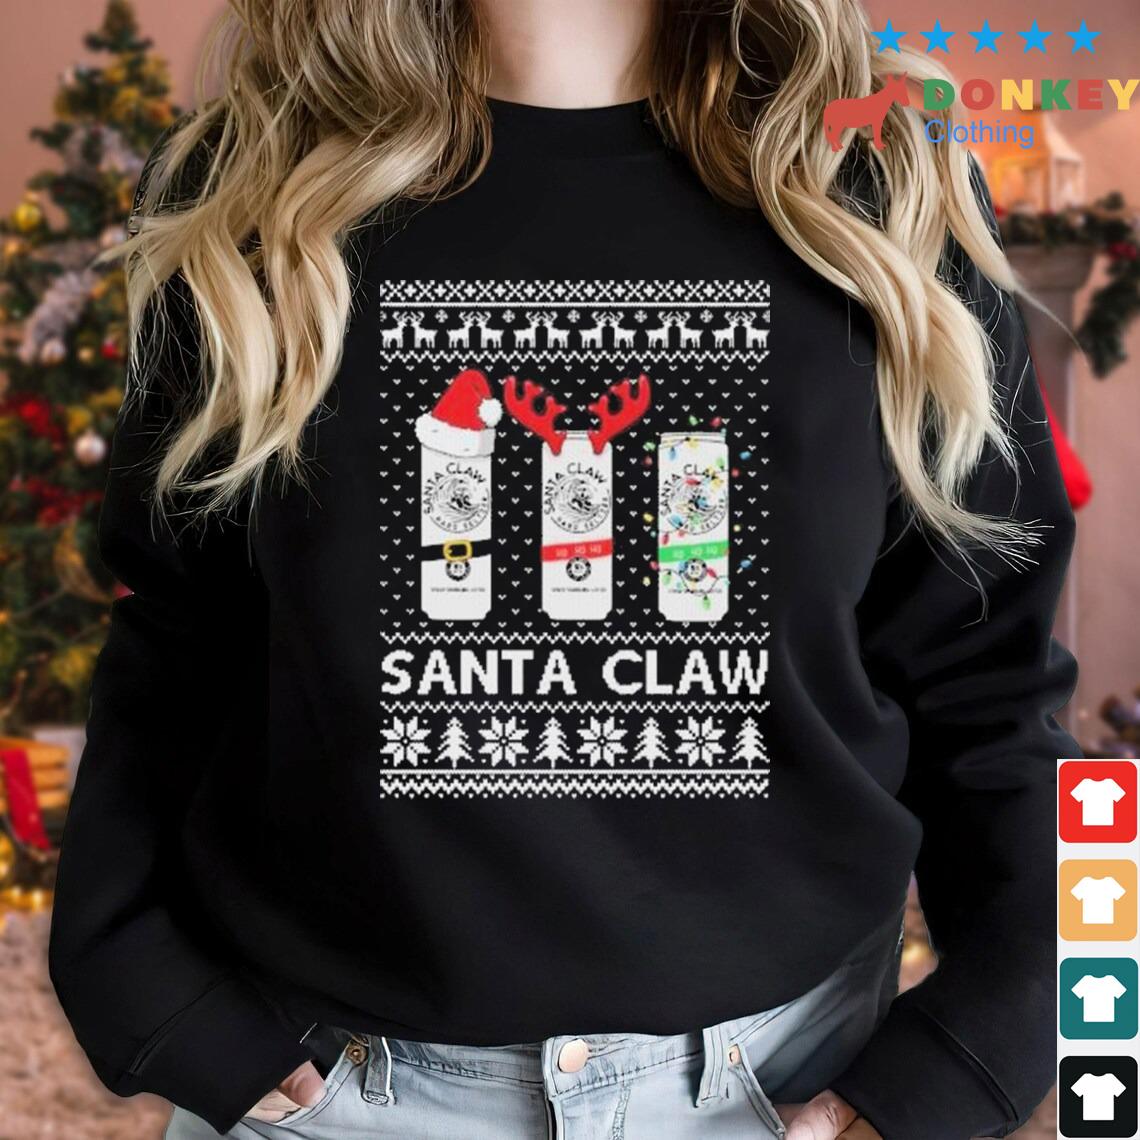 Santa Claw White Claw Hard Seltzer Logo Ugly Christmas Sweater